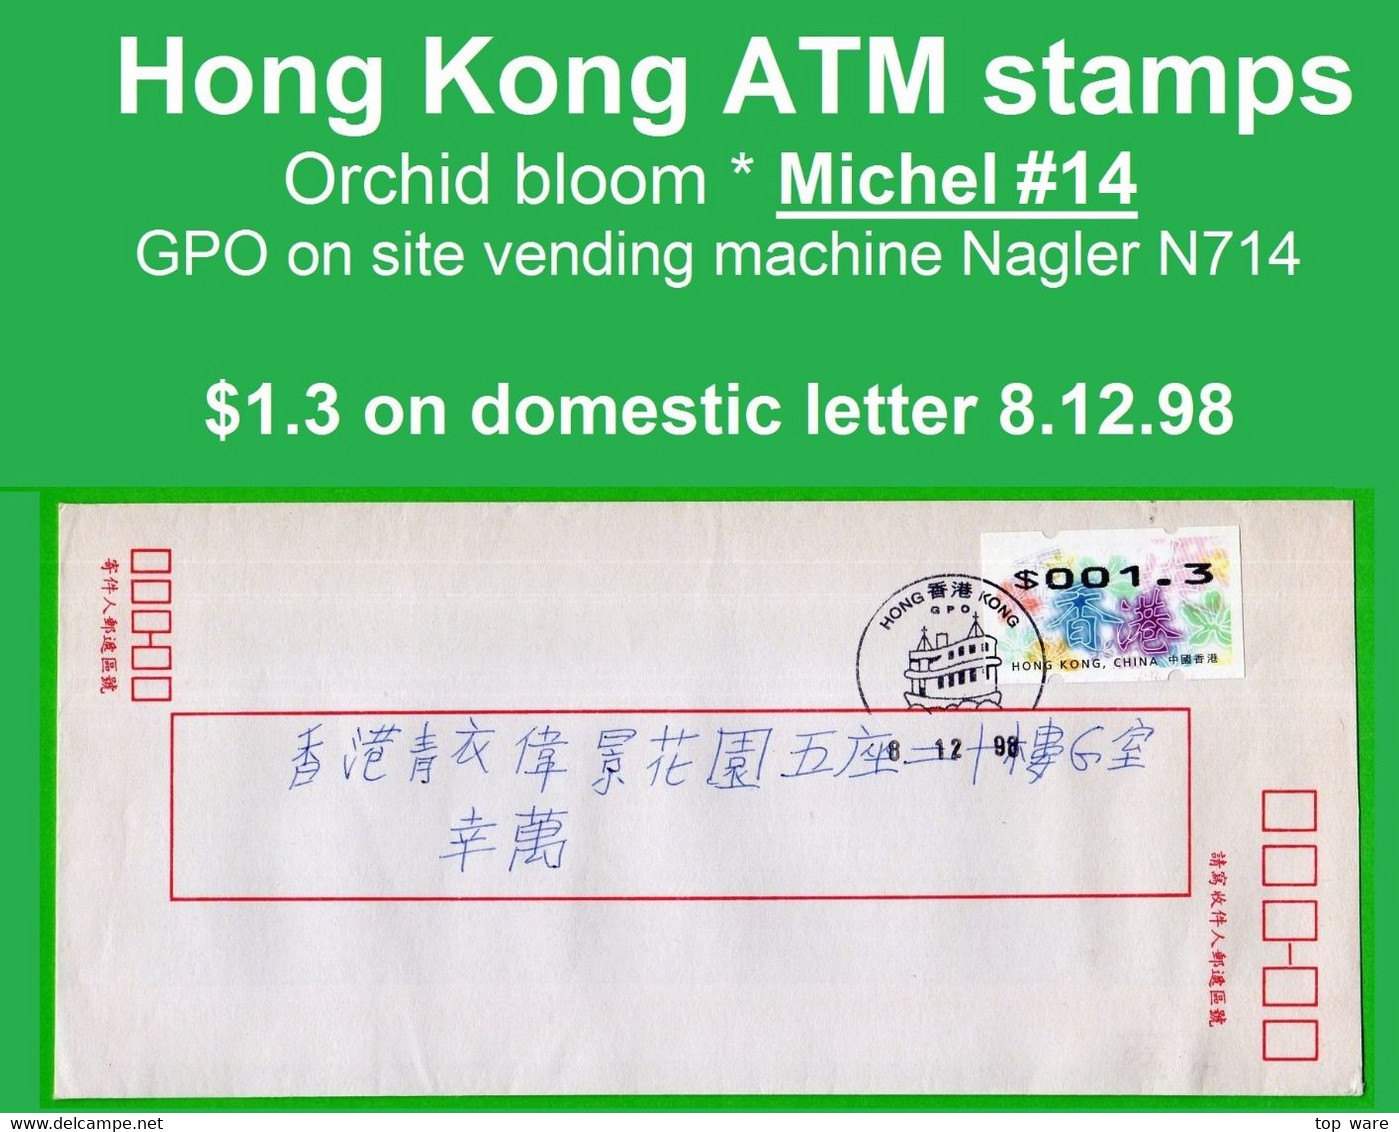 Hong Kong China ATM Stamps, 1998, Orchid Bloom Bauhinia, $1.30 On GPO Letter 8.12.98, Nagler N714, Frama Hongkong - Automatenmarken